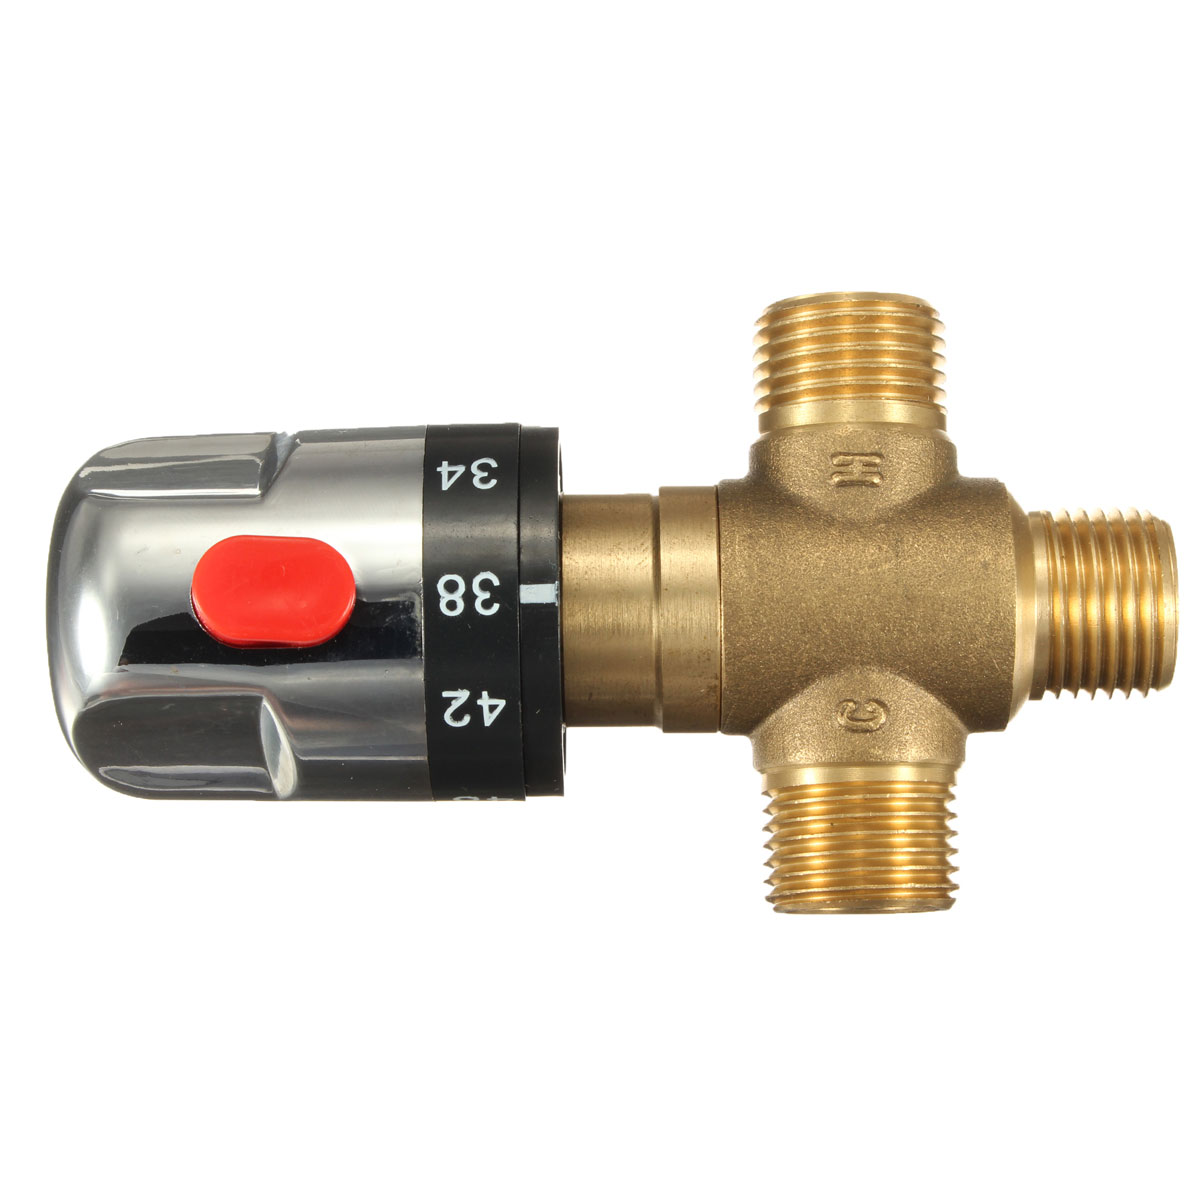 Brass-Thermostatic-Valve-Temperature-Mixing-Valve-For-Wash-Basin-Bidet-Shower-1290505-4